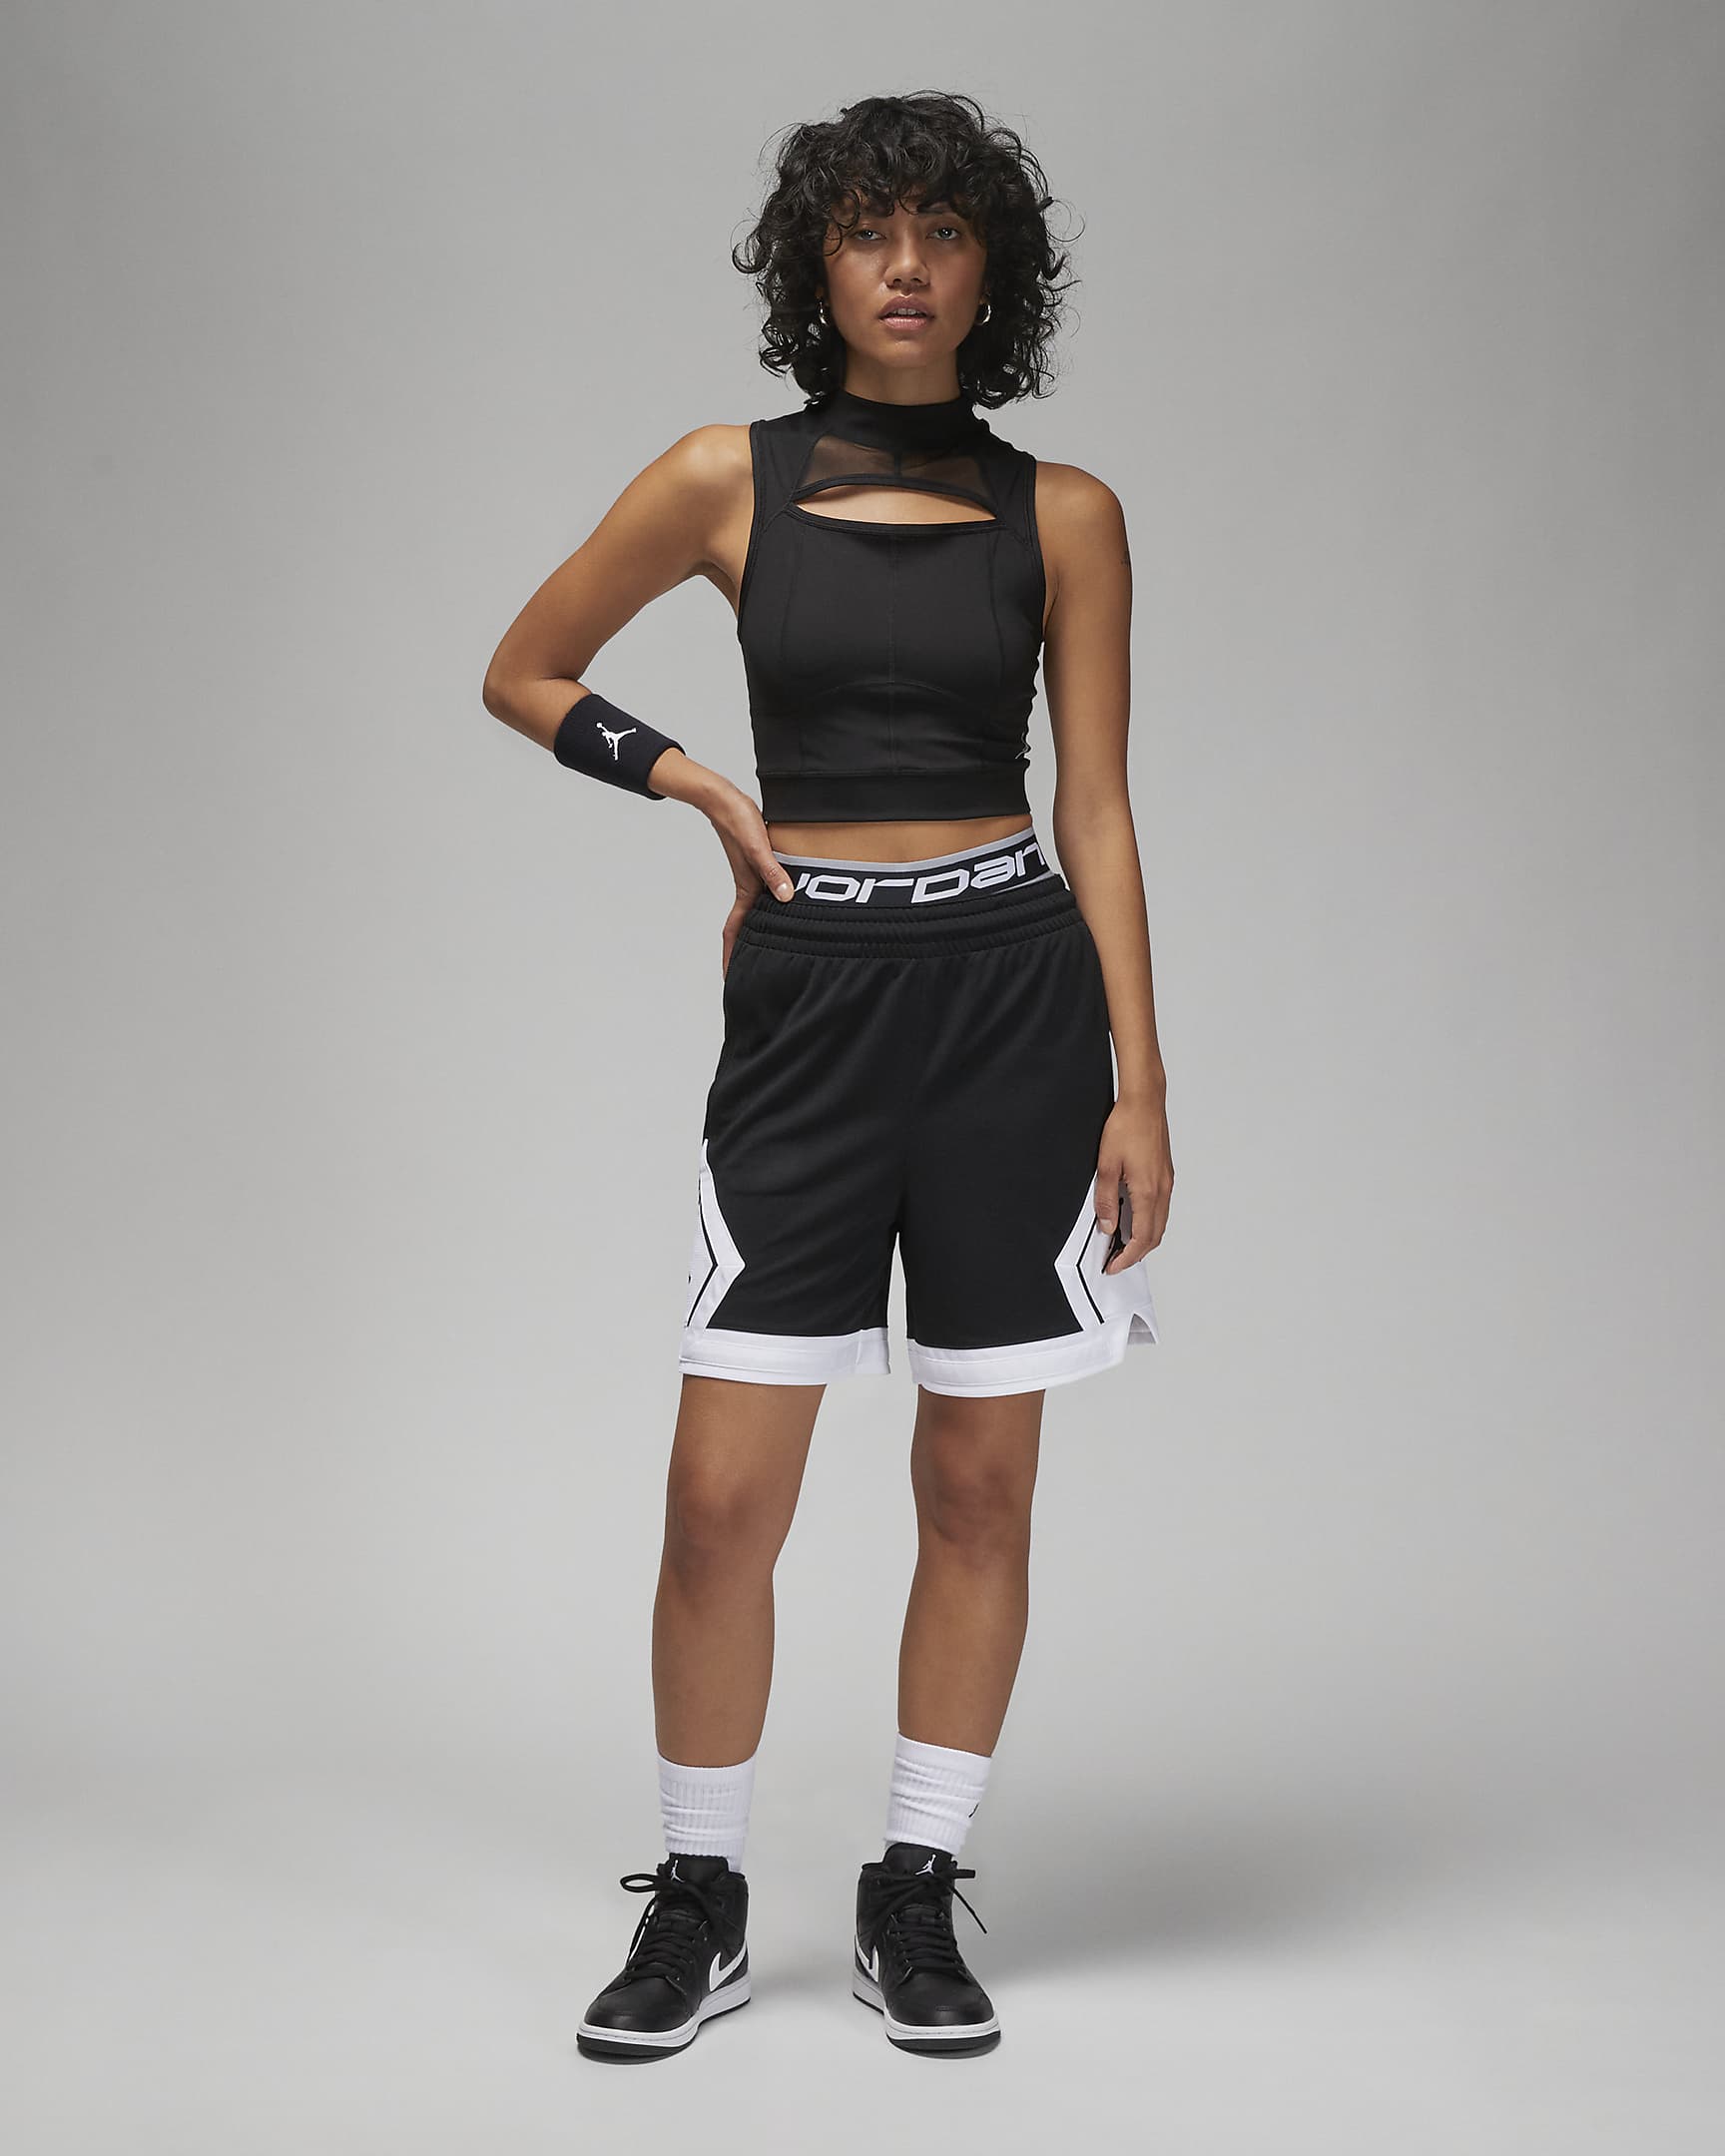 Jordan Sport Women's Diamond Shorts - Black/White/White/Black